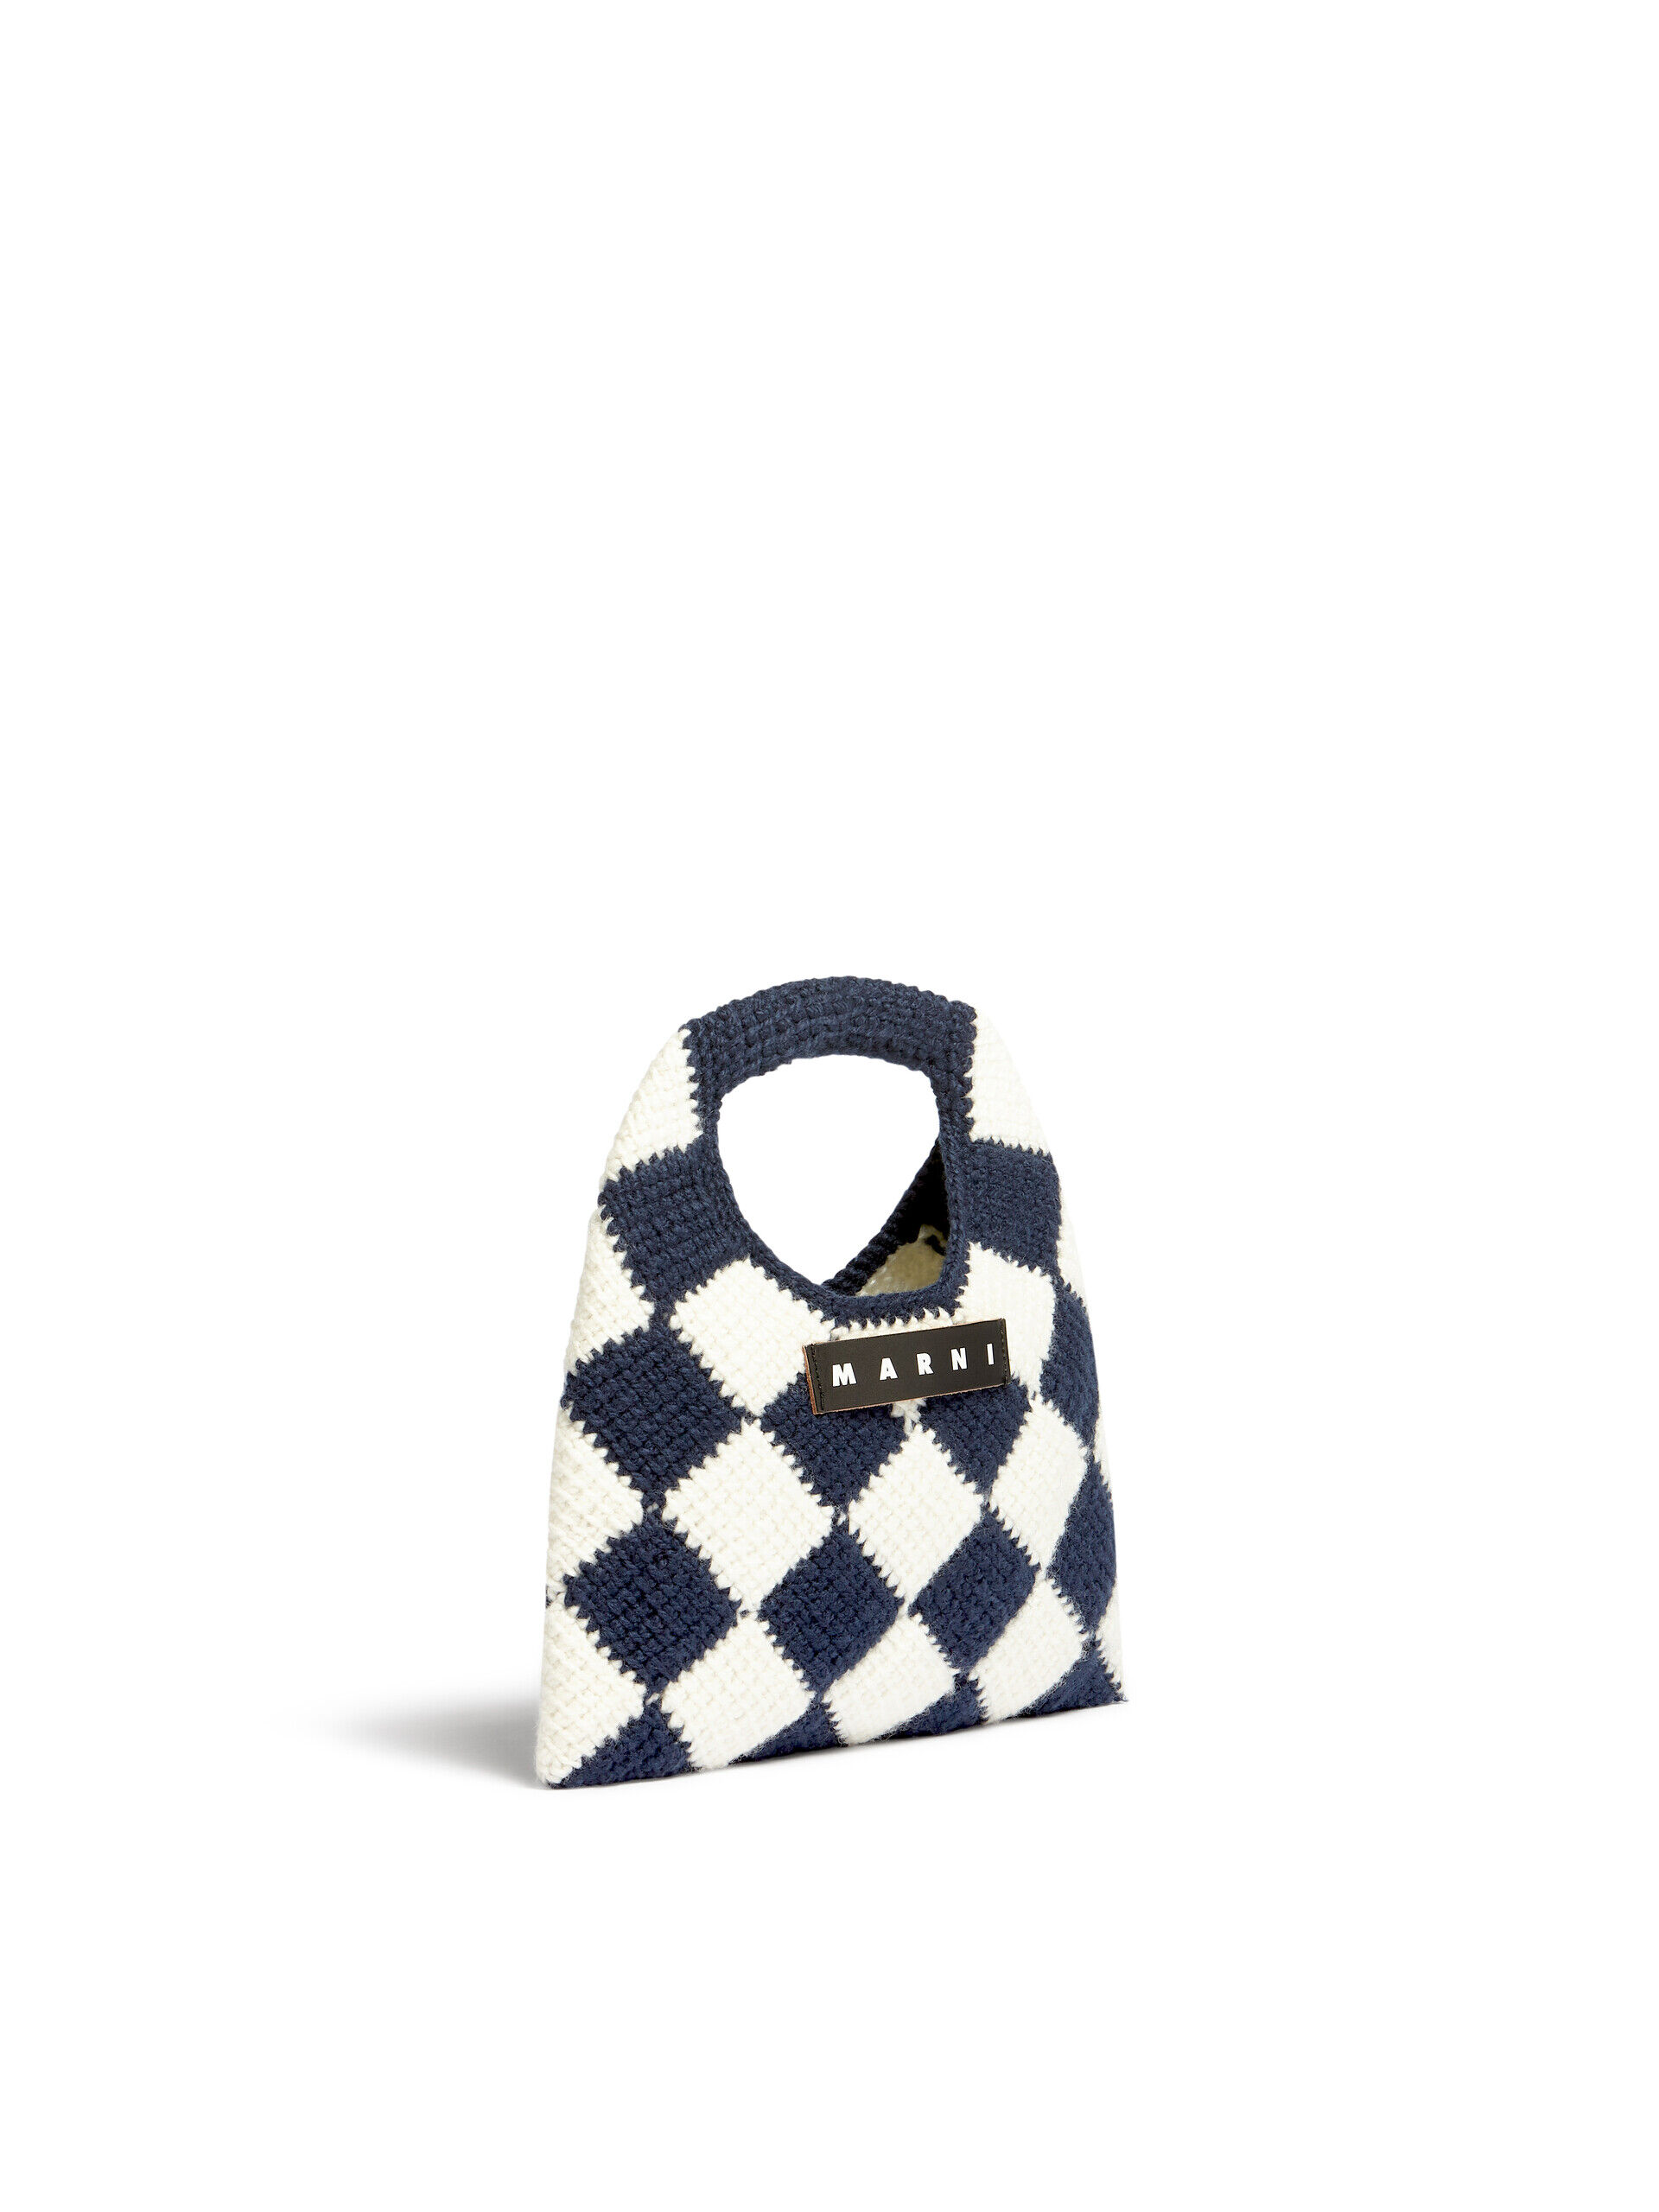 MARNI MARKET DIAMOND small bag in white and blue tech wool | Marni